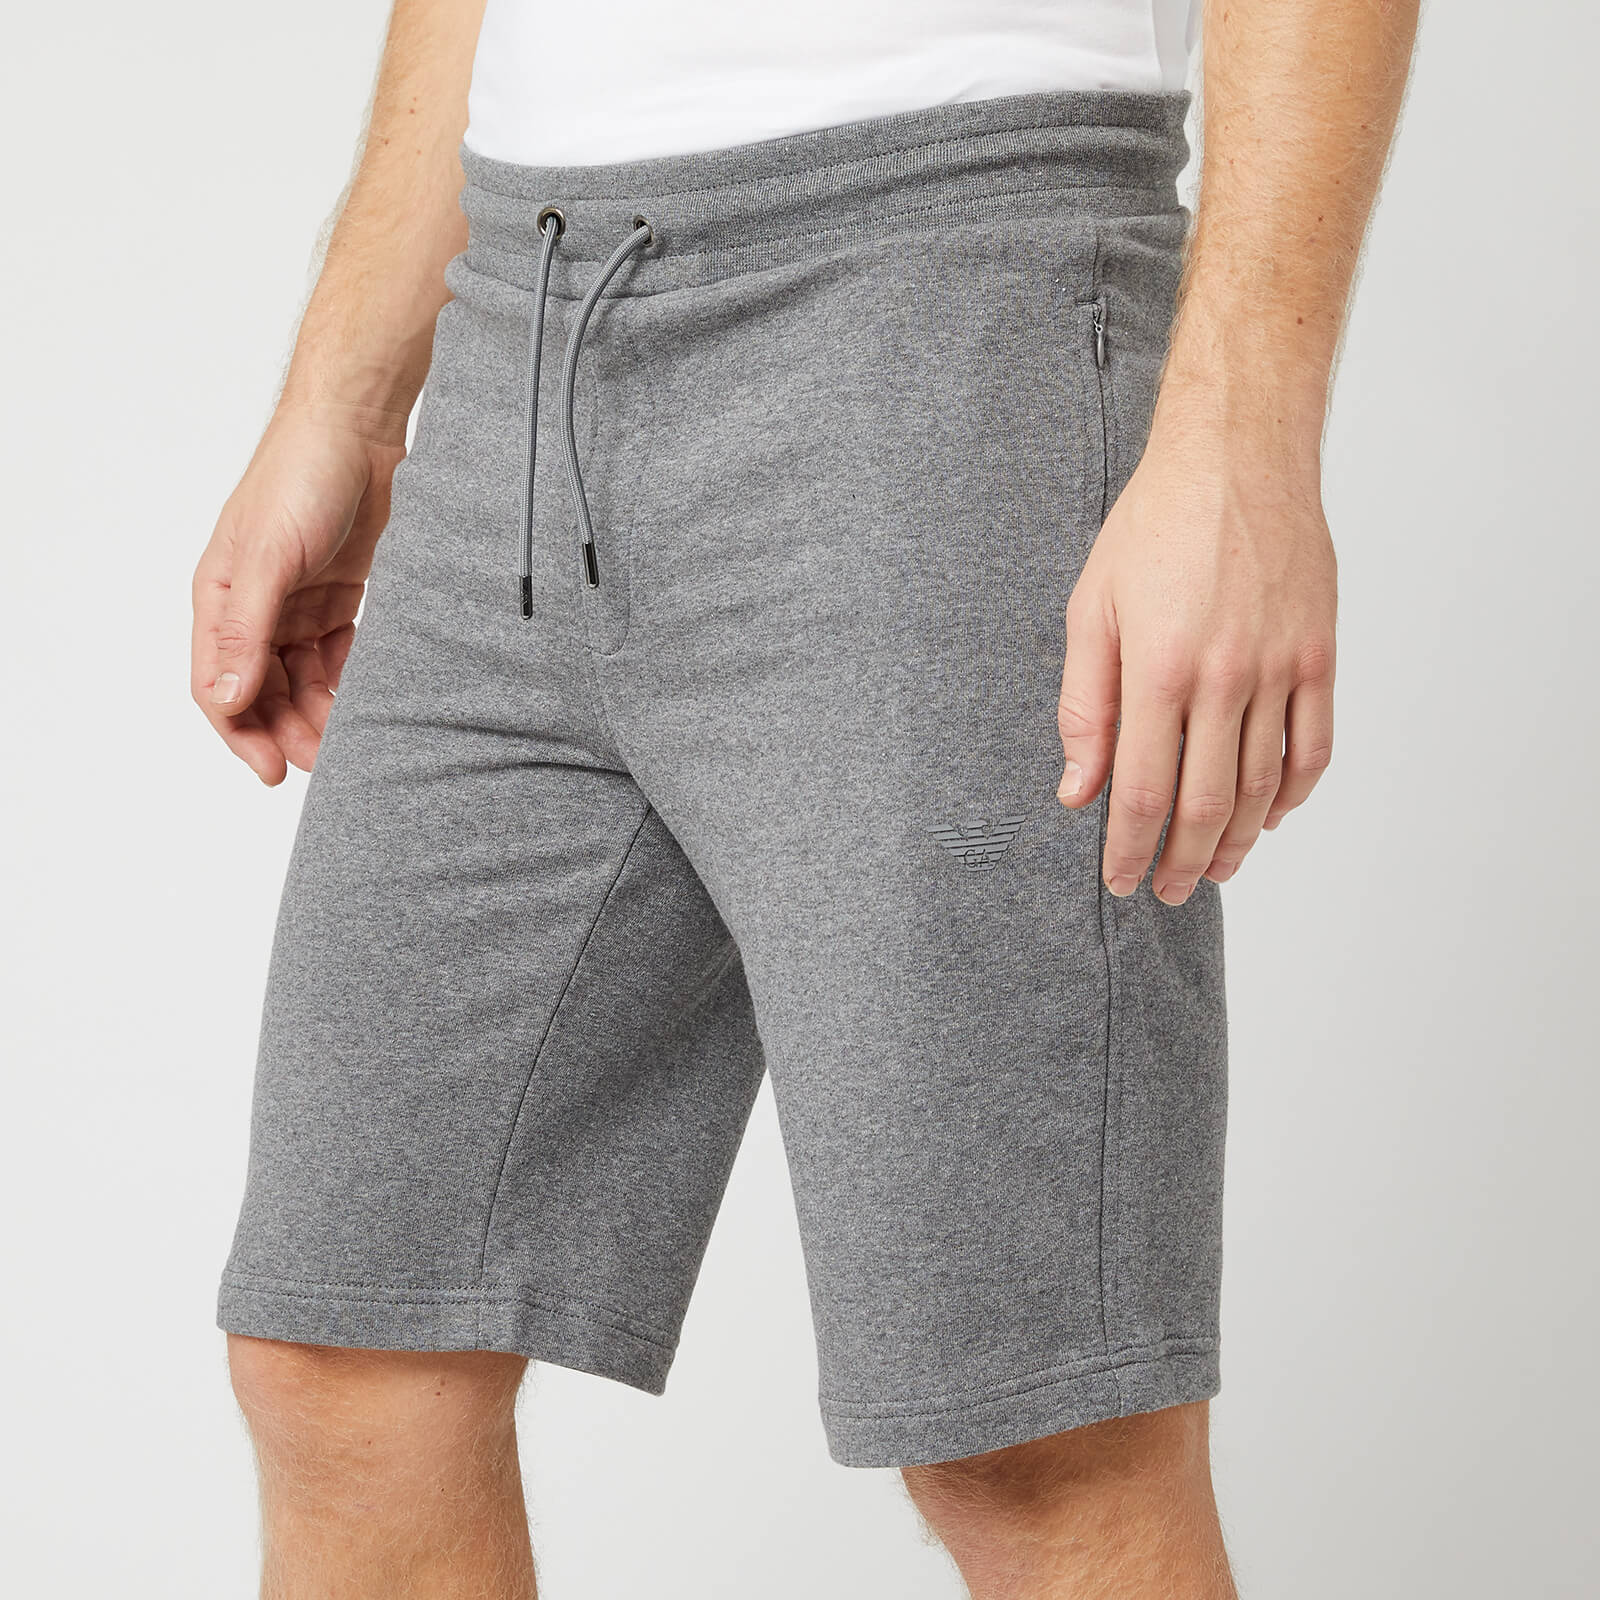 grey armani shorts